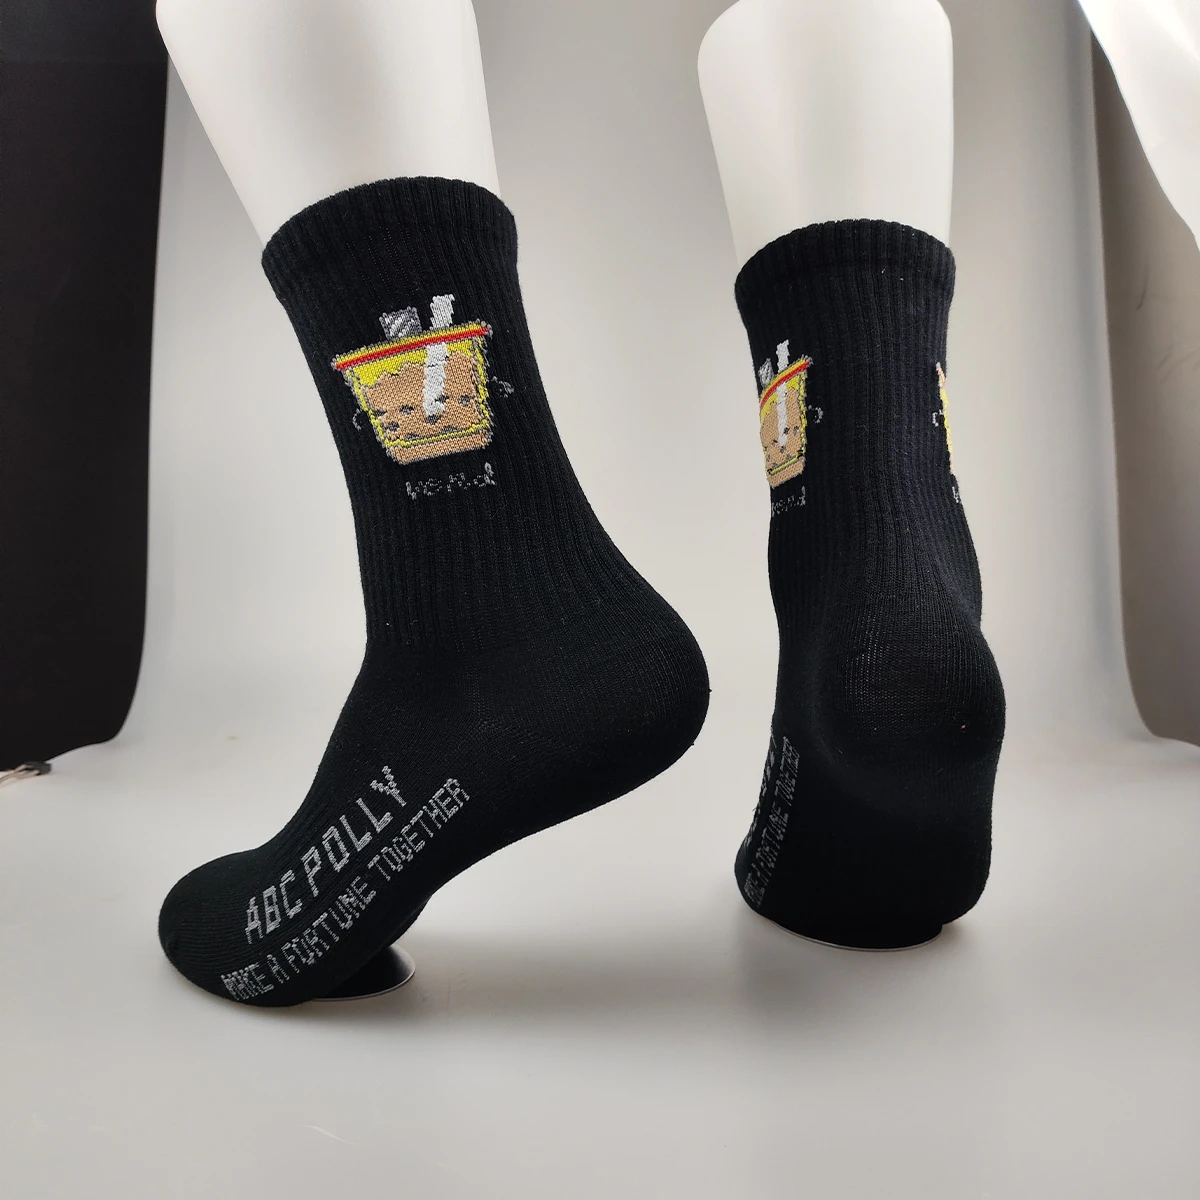 

Black Food Adult Vivid Comfy Ankle Socks Fitness School Unisex Pretty Hipster Tube Socks Trekking Cotton Short Cool Stuff